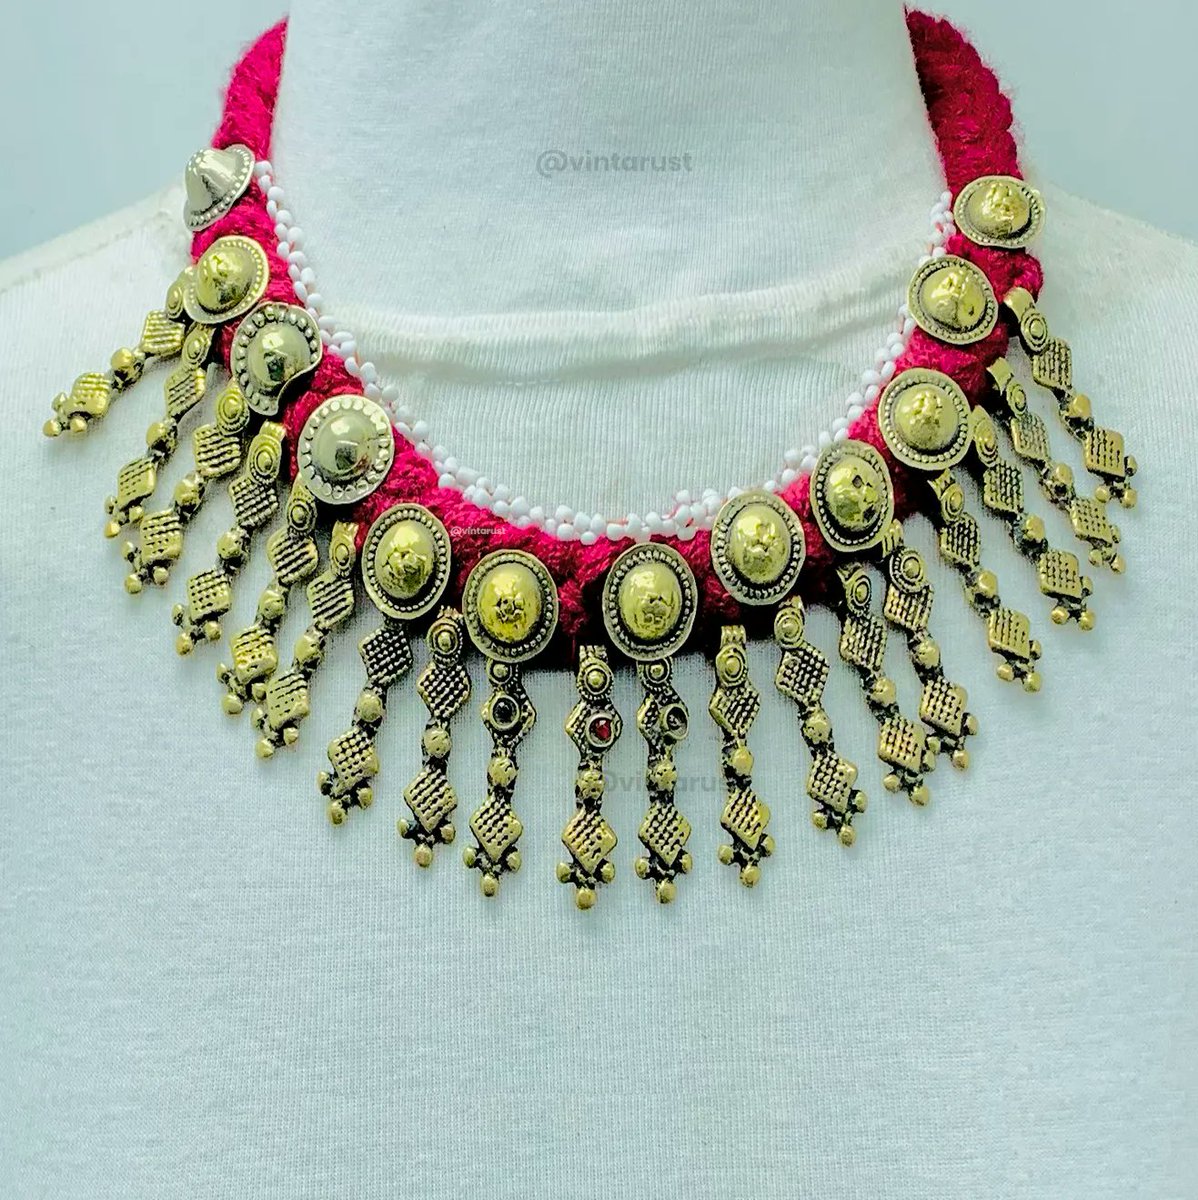 Handmade Choker Necklace With Metal Spikes.

Shop Now:
buff.ly/3MXezTW

#afghanijewelry #tribalstyle #bohochic #glassstones #vintagecoins #handpicked #jewelryset #traditionalornament #authenticjewelry #elegantstyle #vintarust #necklace #antiquejewels #antiquejewelry